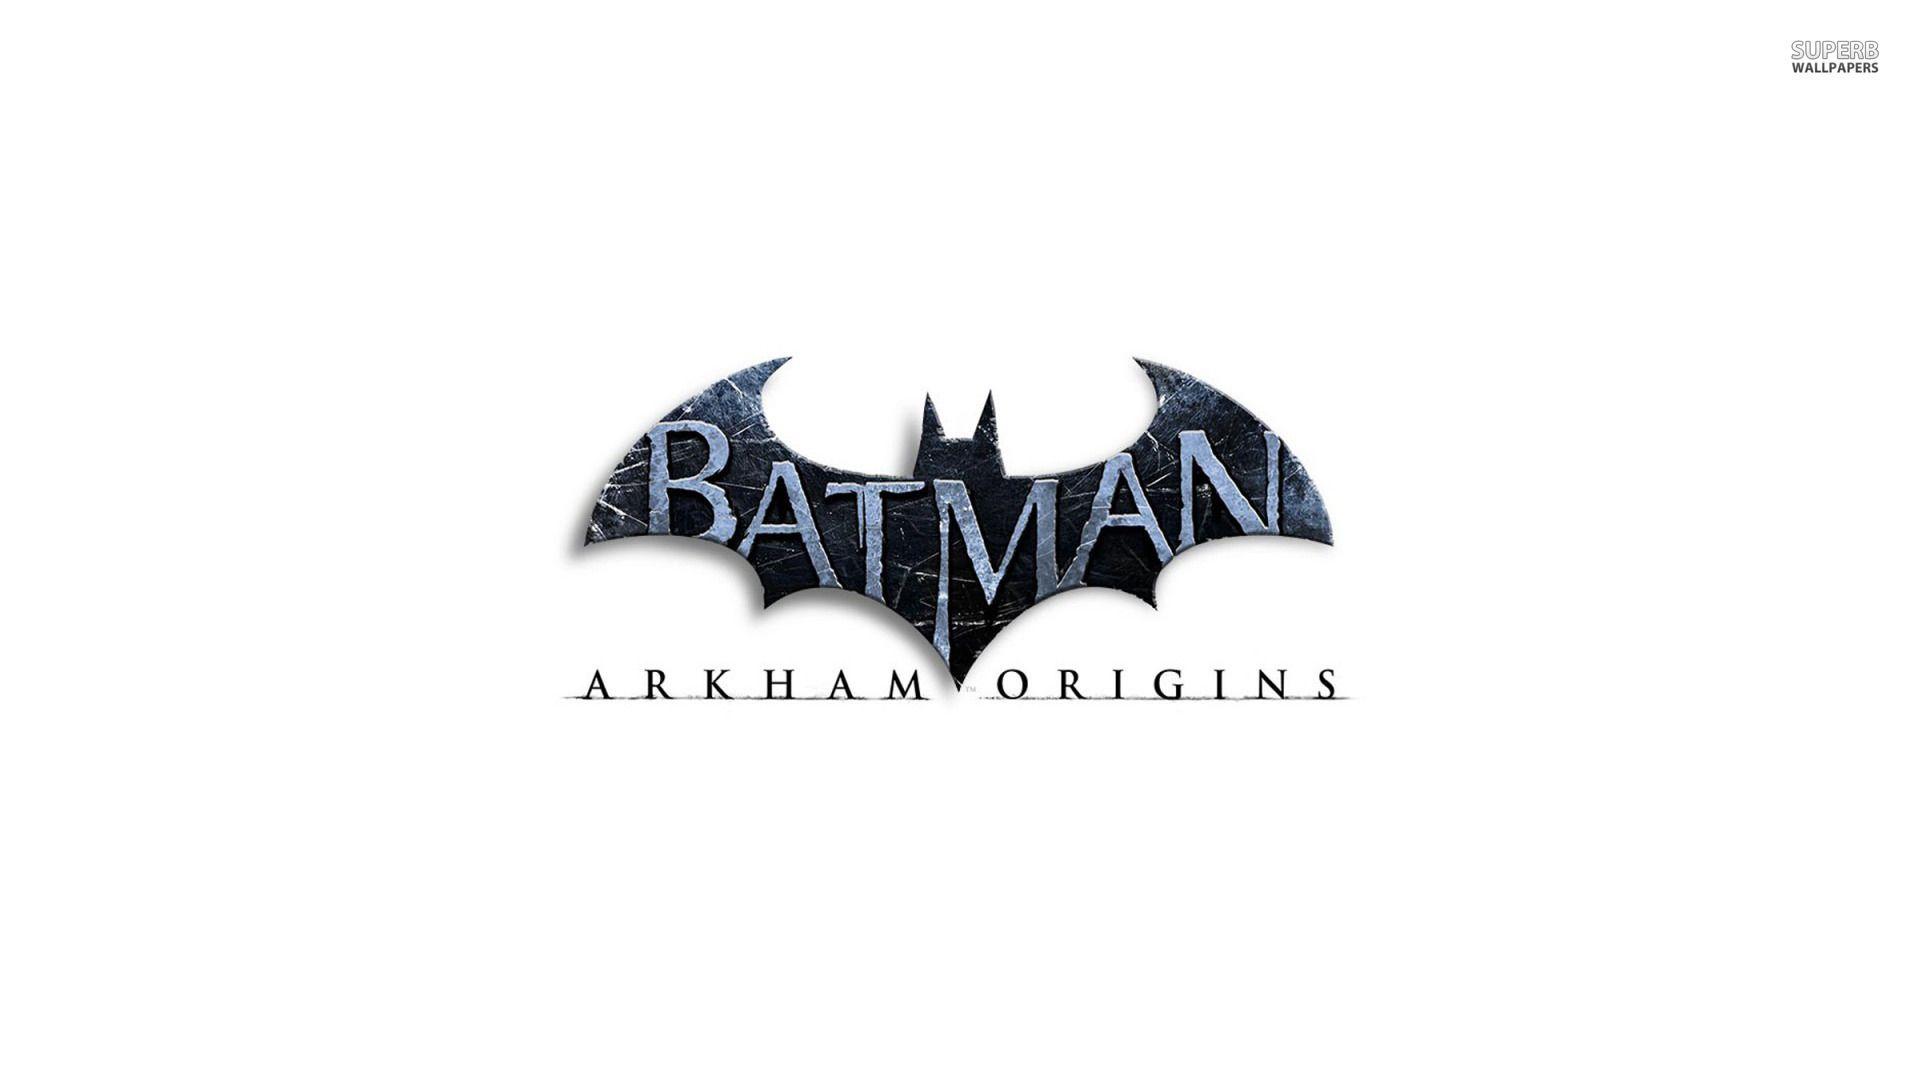 Batman Arkham Origins Logo - Batman: Arkham Origins in white wallpapers and images - wallpapers ...